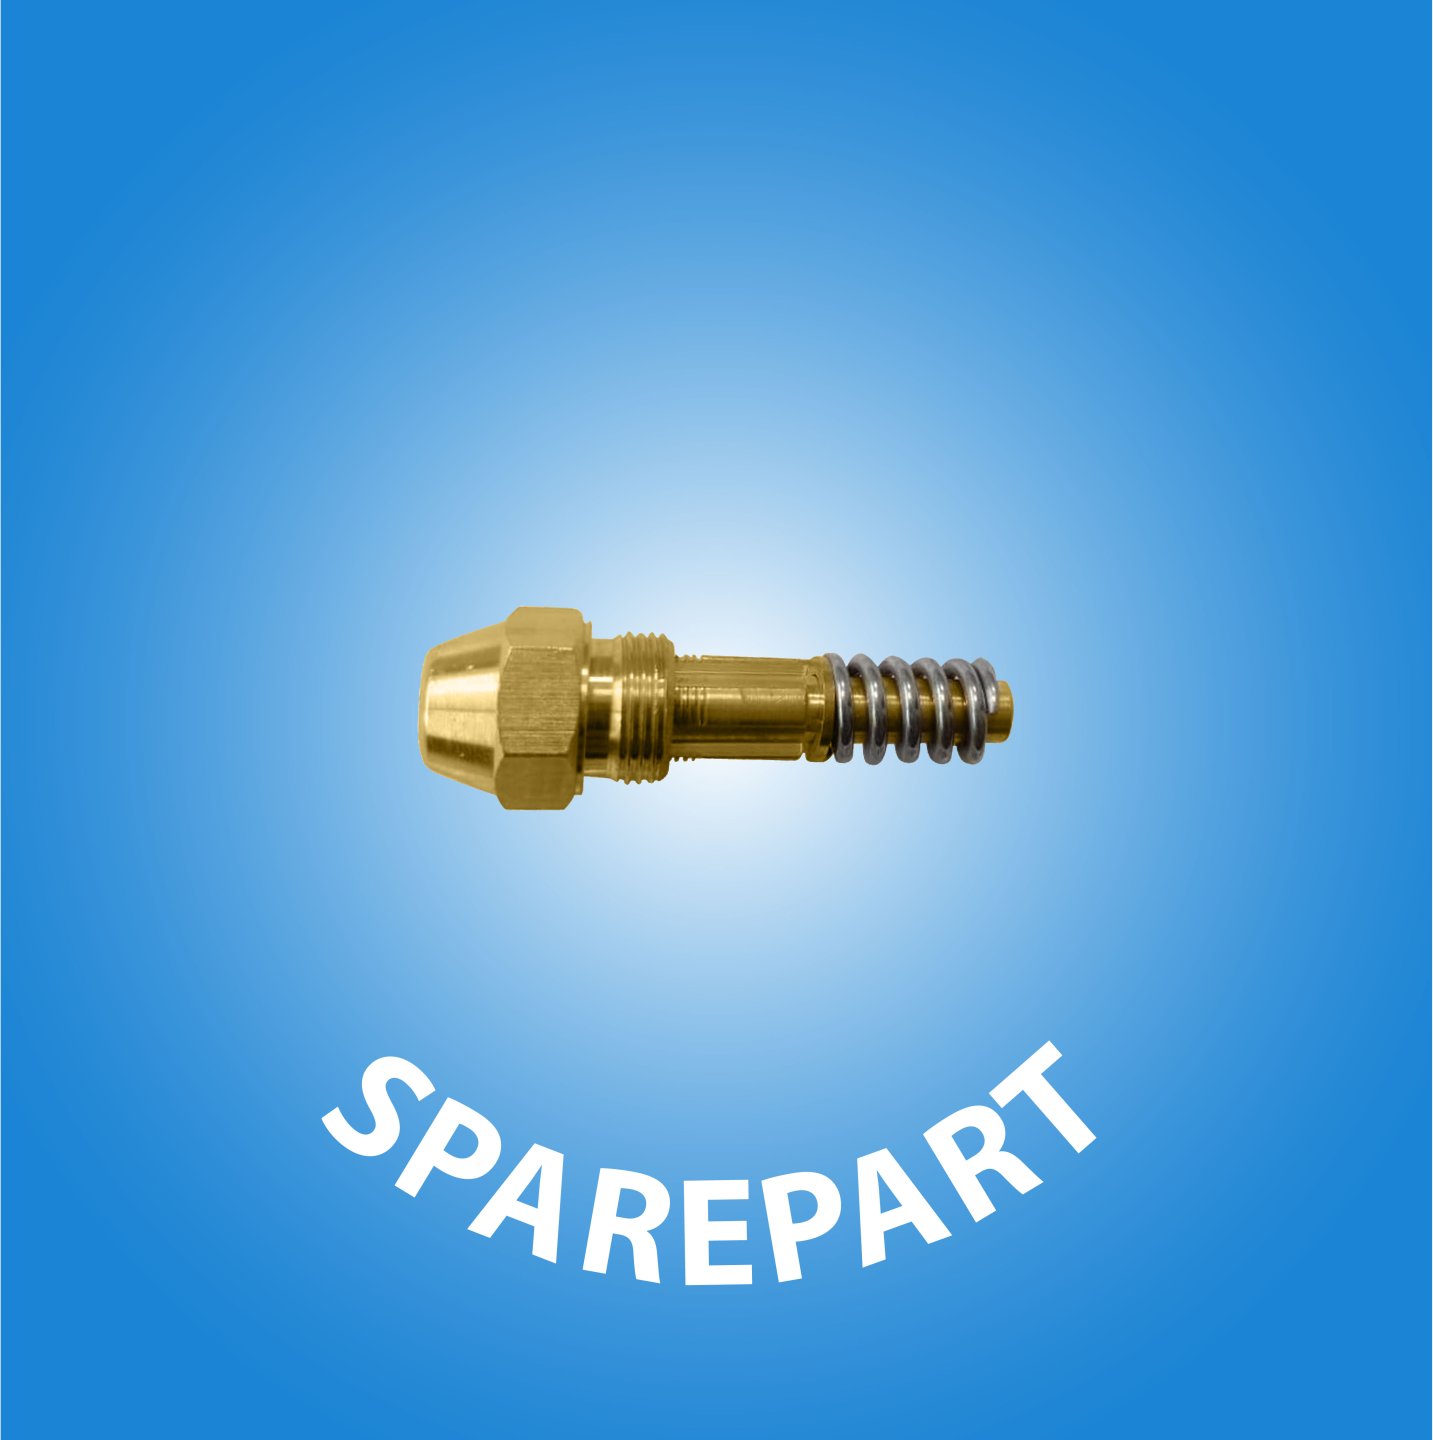  Sparepart cover kategori website 43